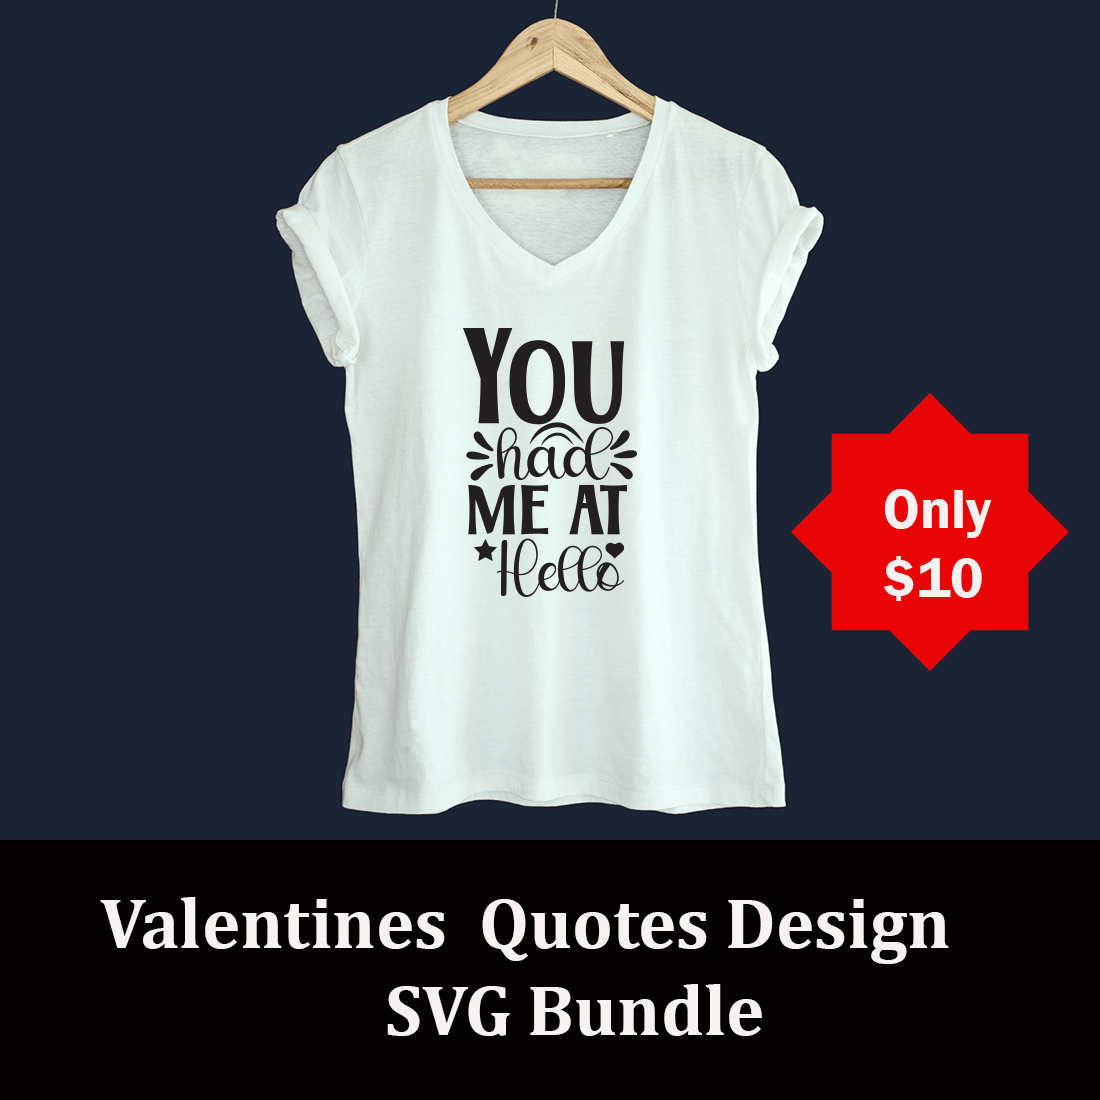 Valentines Quotes Design SVG Bundle cover image.